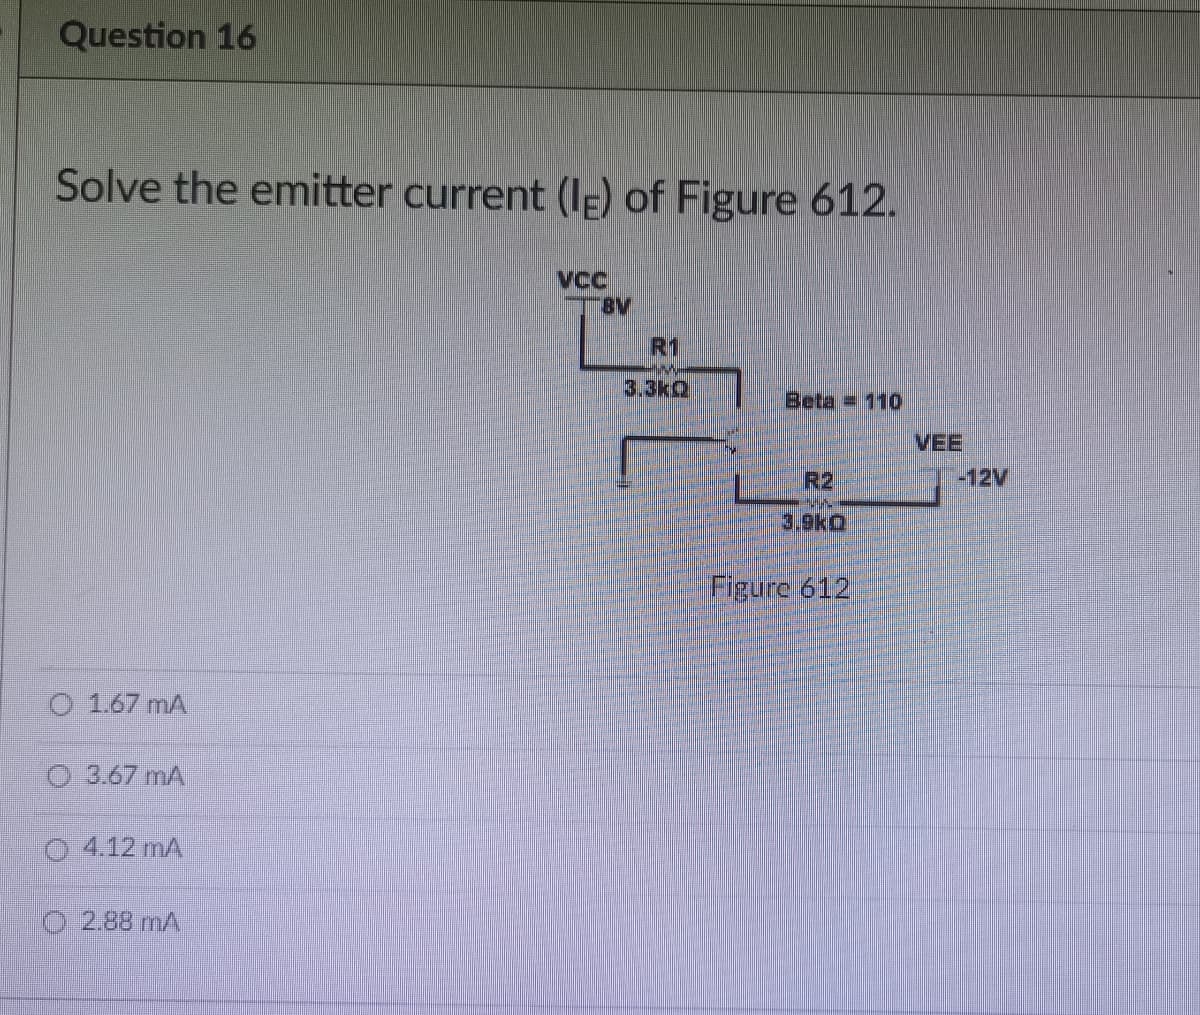 Question 16
Solve the emitter current (IE) of Figure 612.
VCC
R1
Beta 110
R2
3.9KO
Figure 612
O 1.67 MA
3.67 mA
04.12 mA
2.88 mA
"BV
VEE
-12V